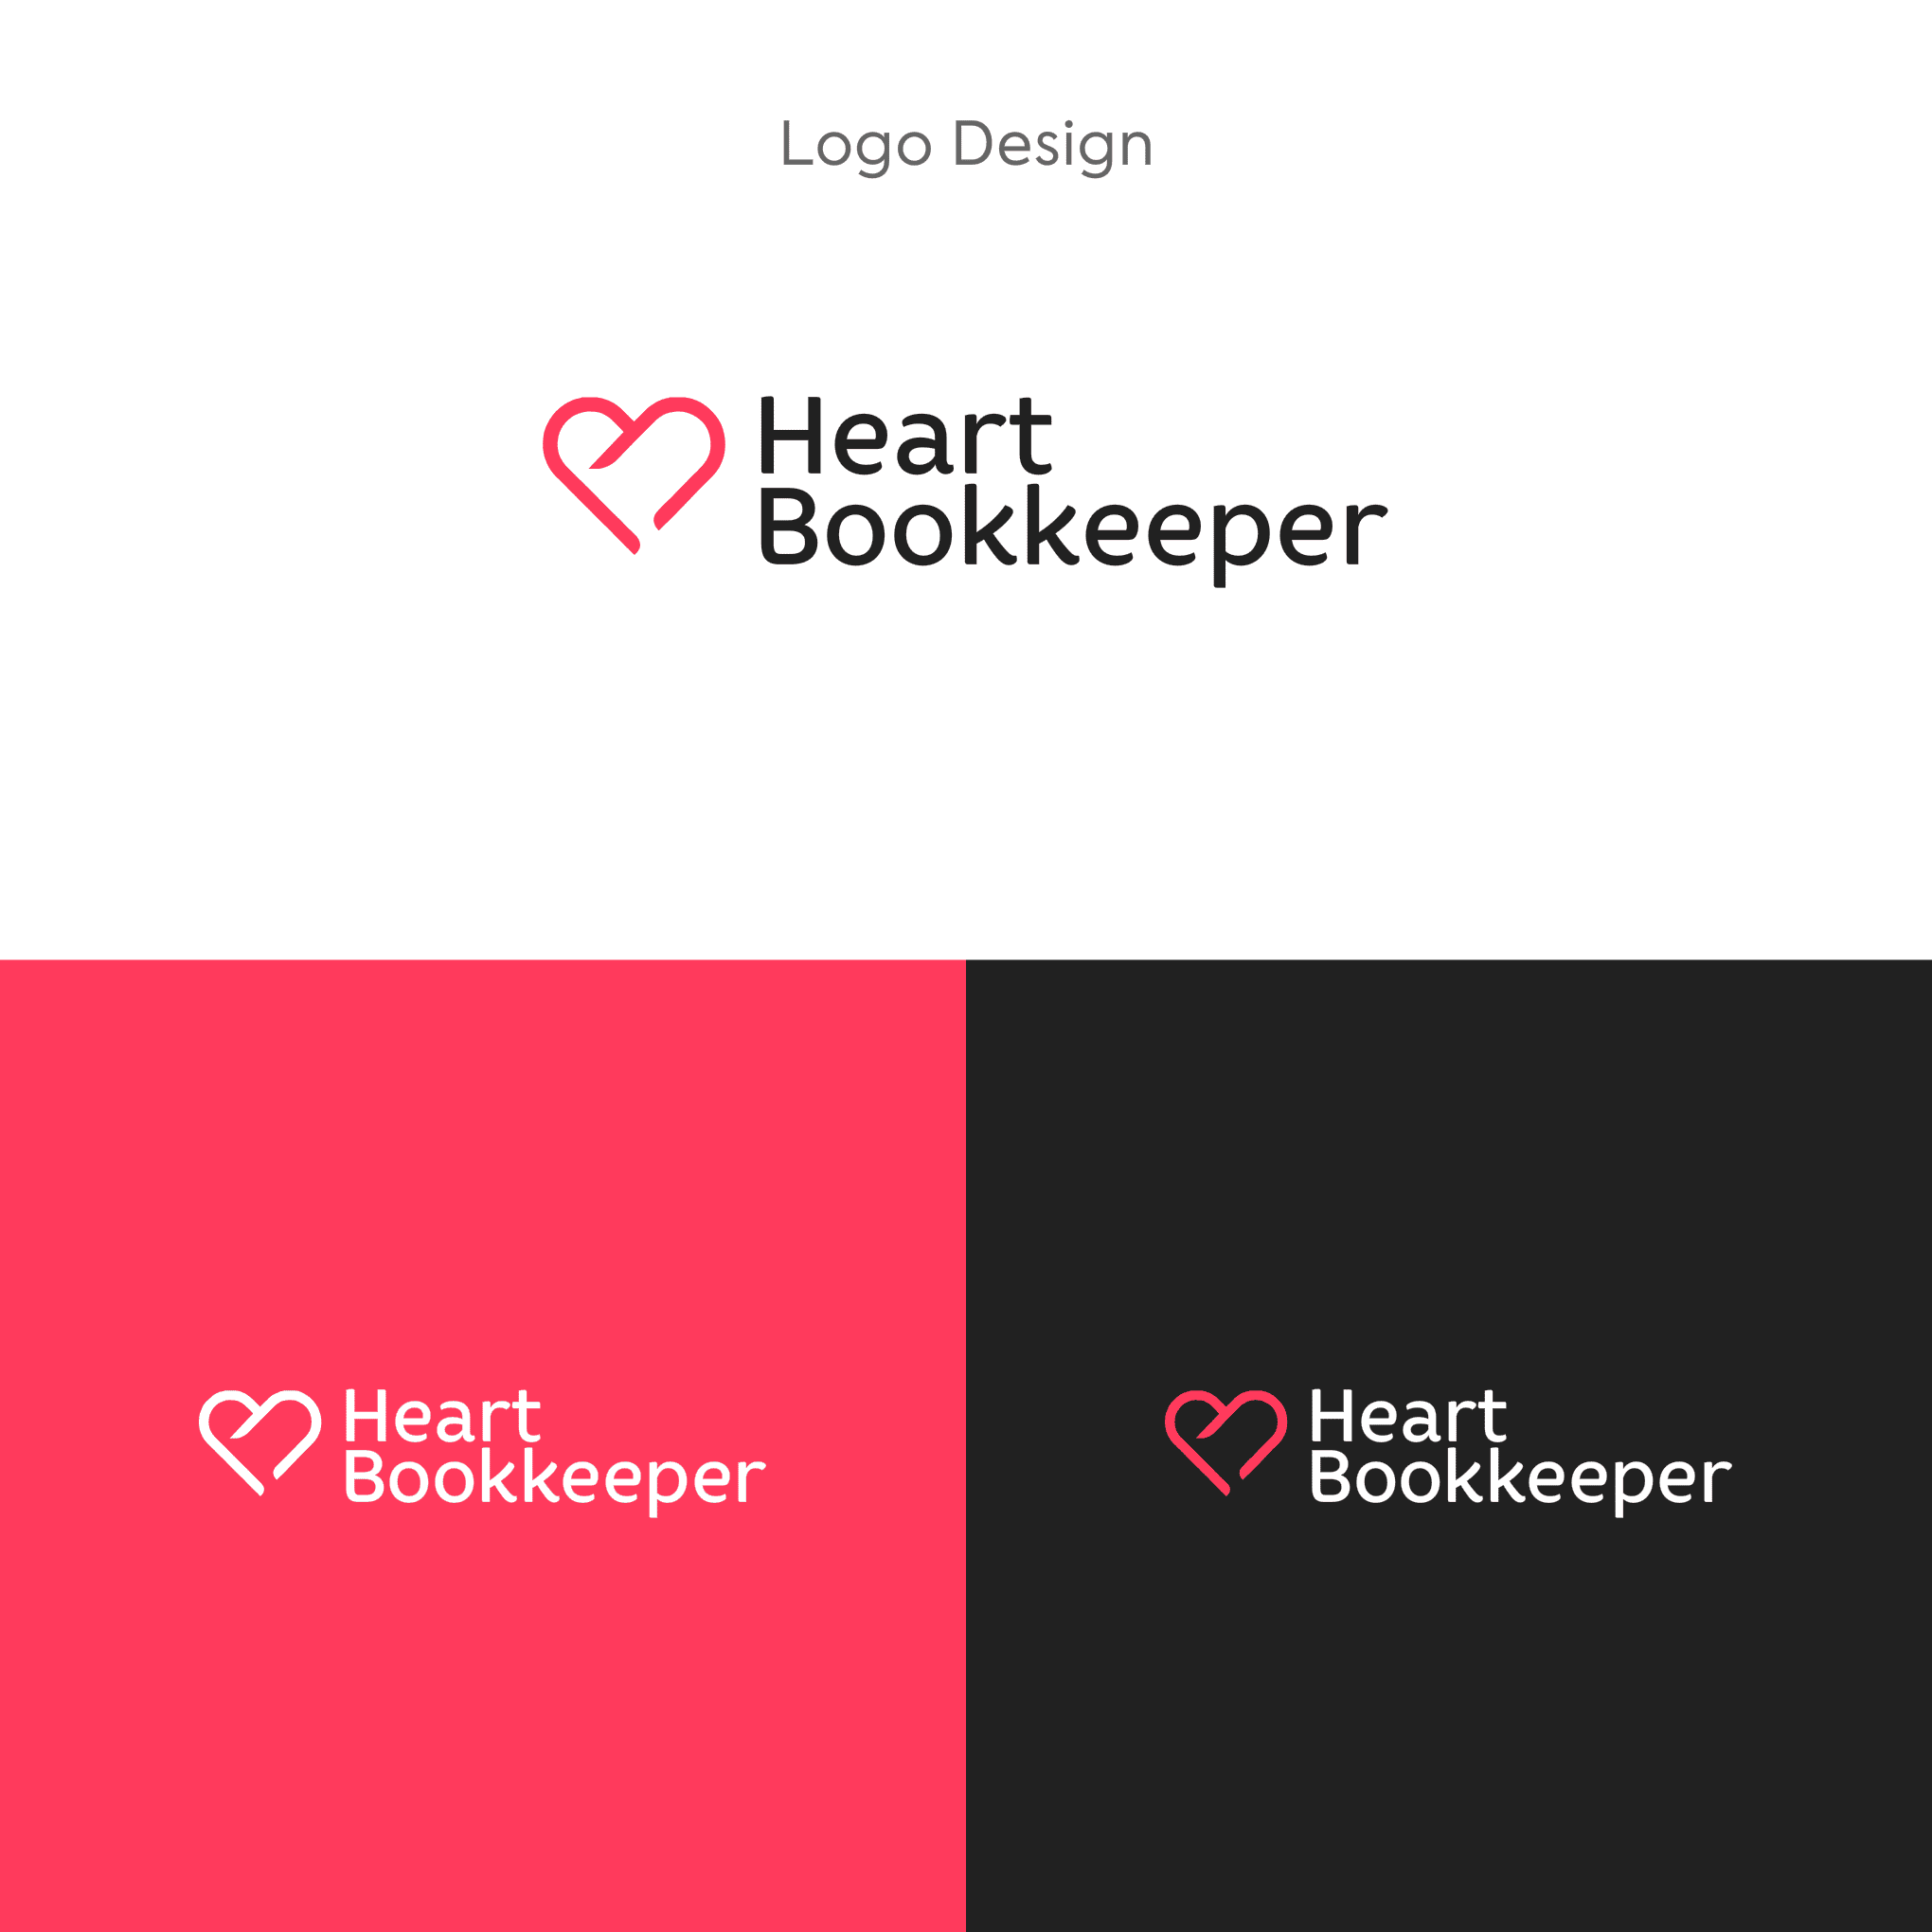 01 - Logo Design (1)